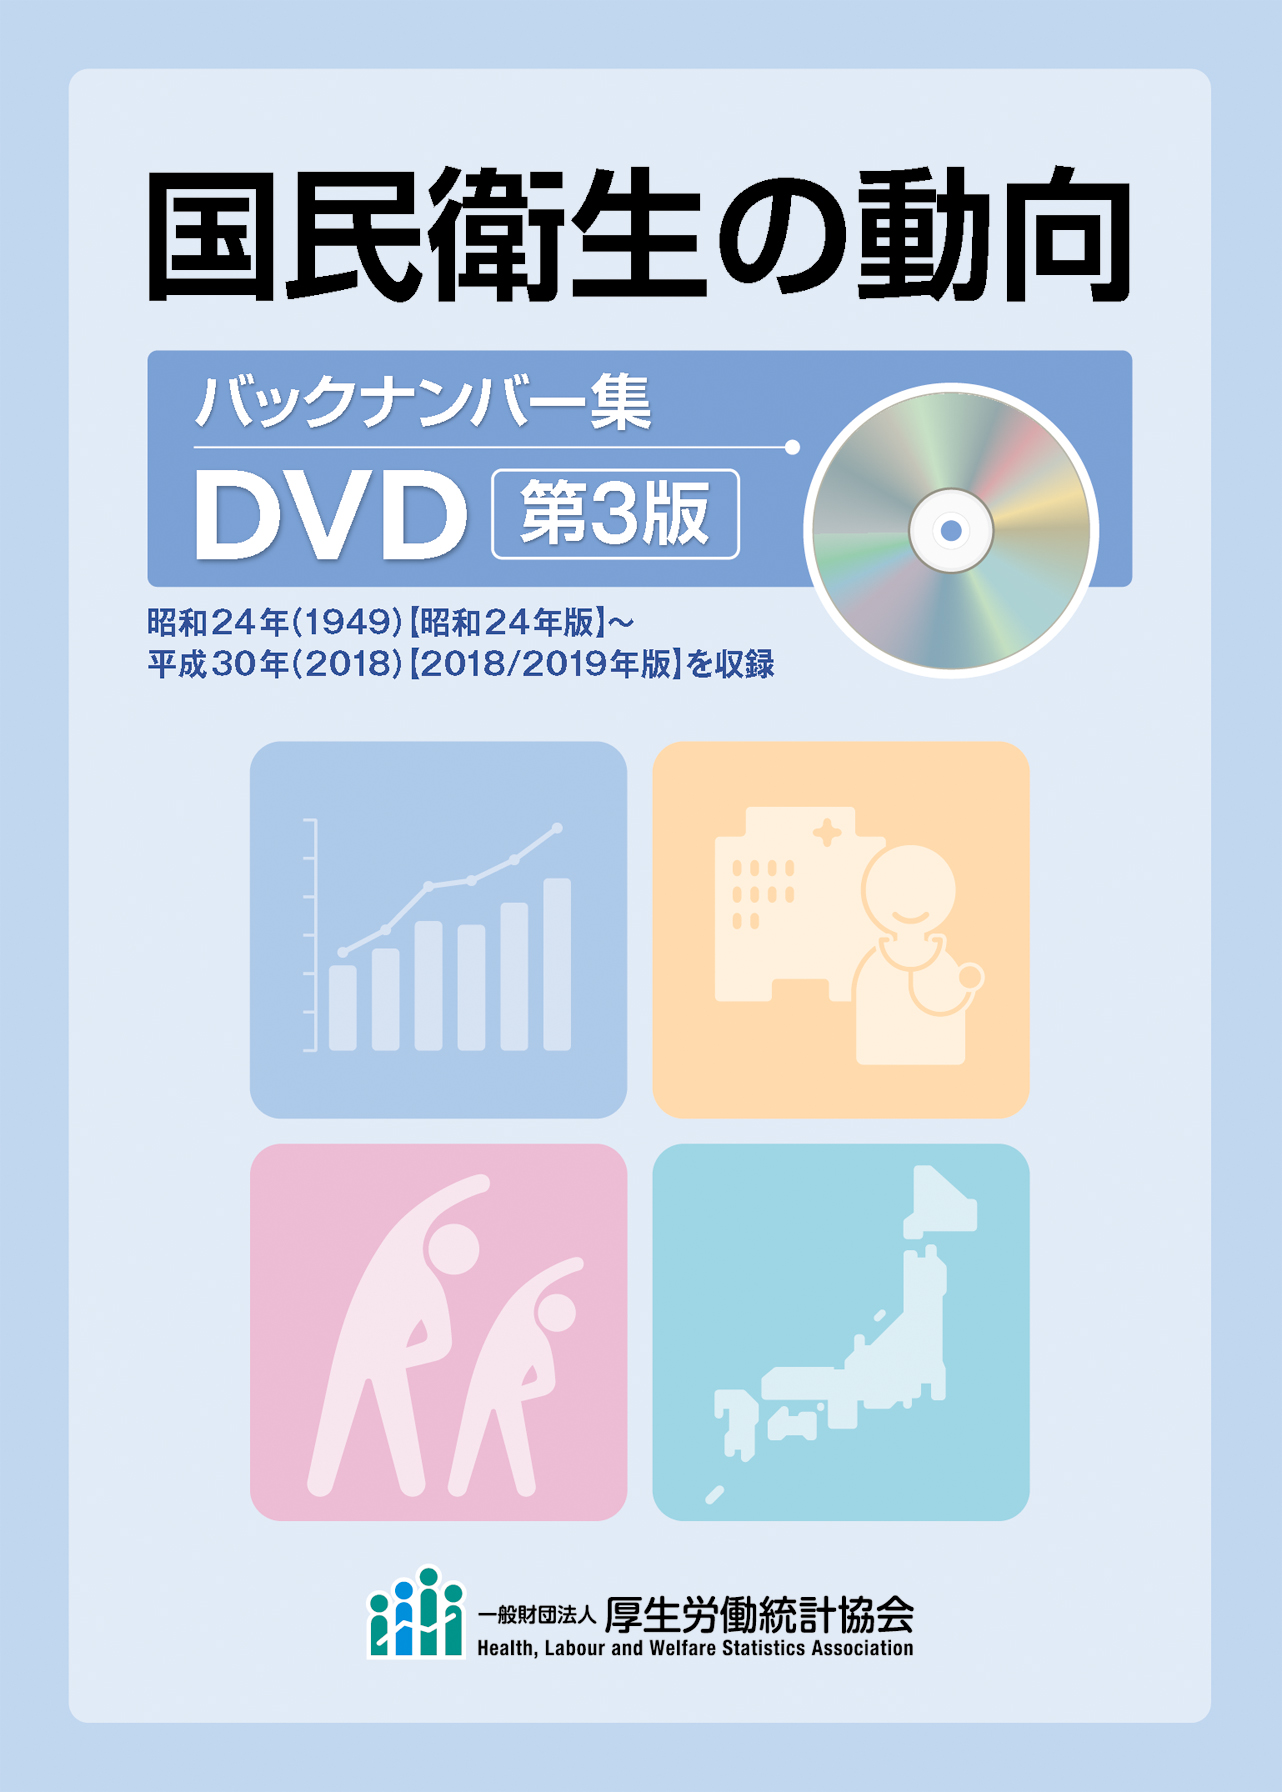 DVDcover Eisei 190603